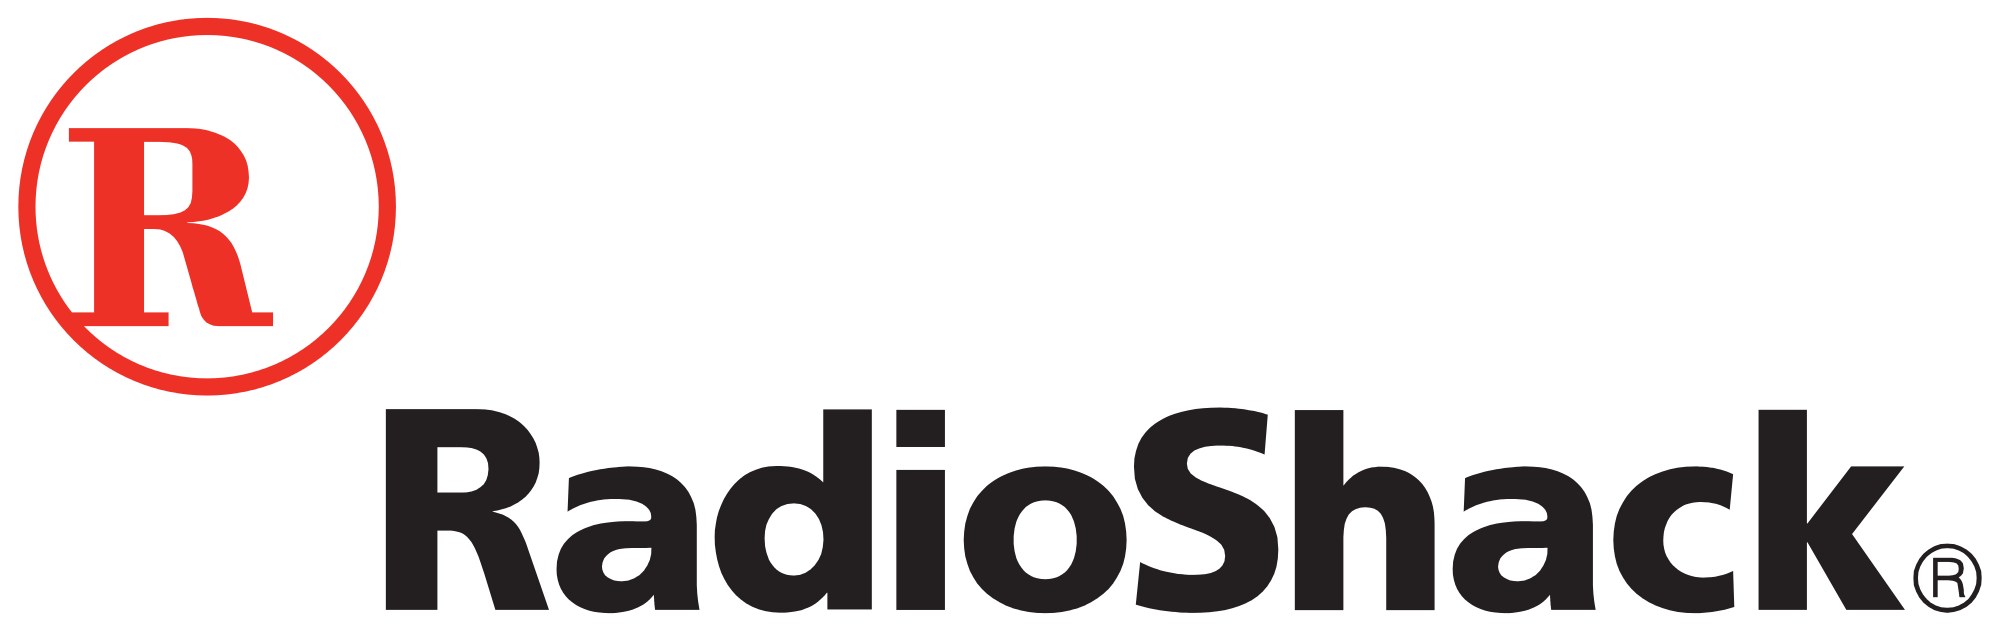 Radio Shack Logo - Logo RadioShack.svg